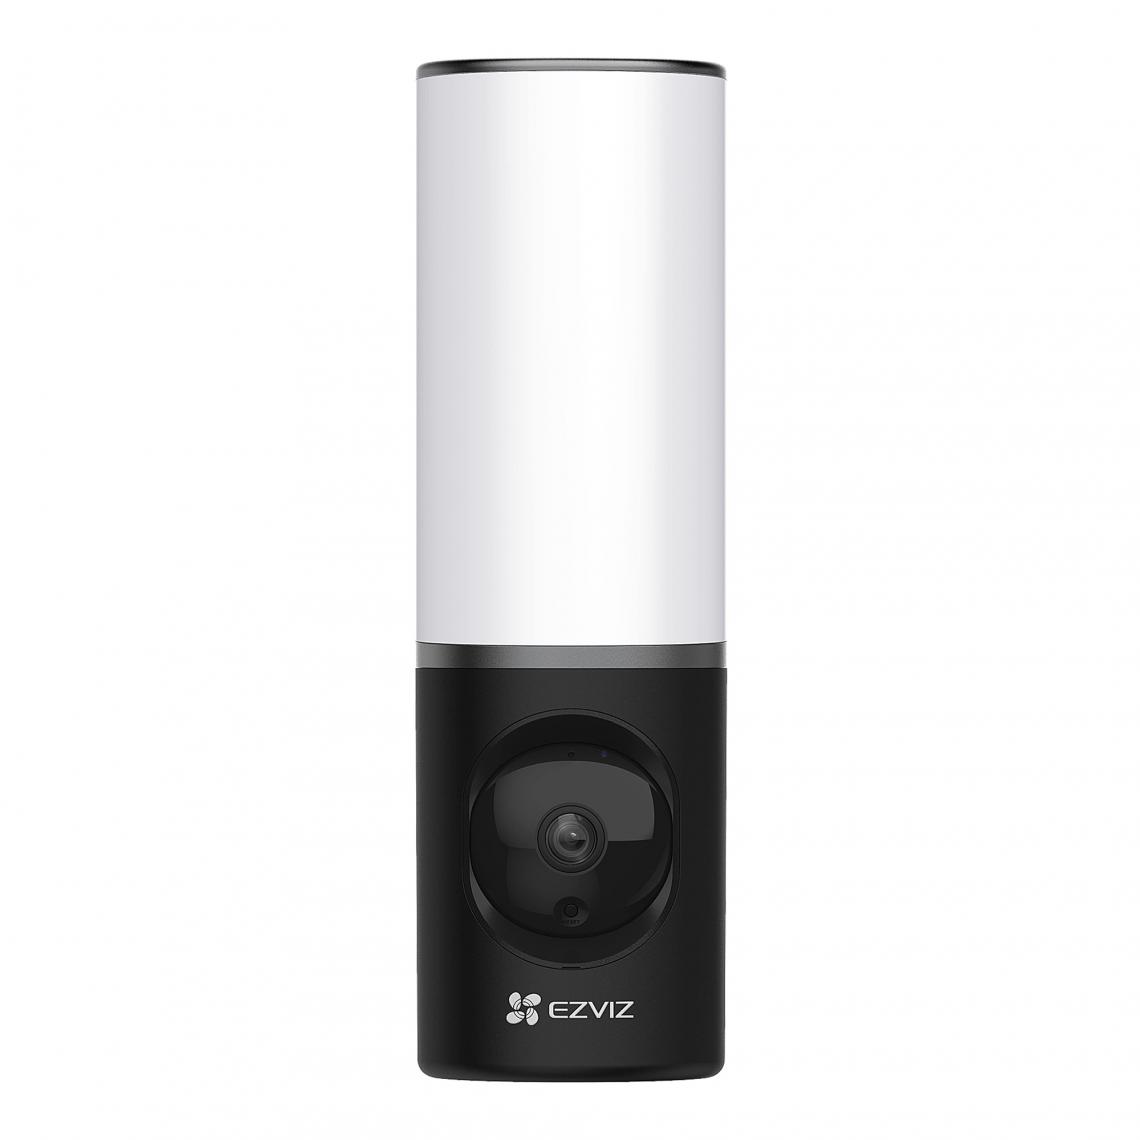 Ezviz - Caméra IP extérieure LC3 - Caméra de surveillance connectée